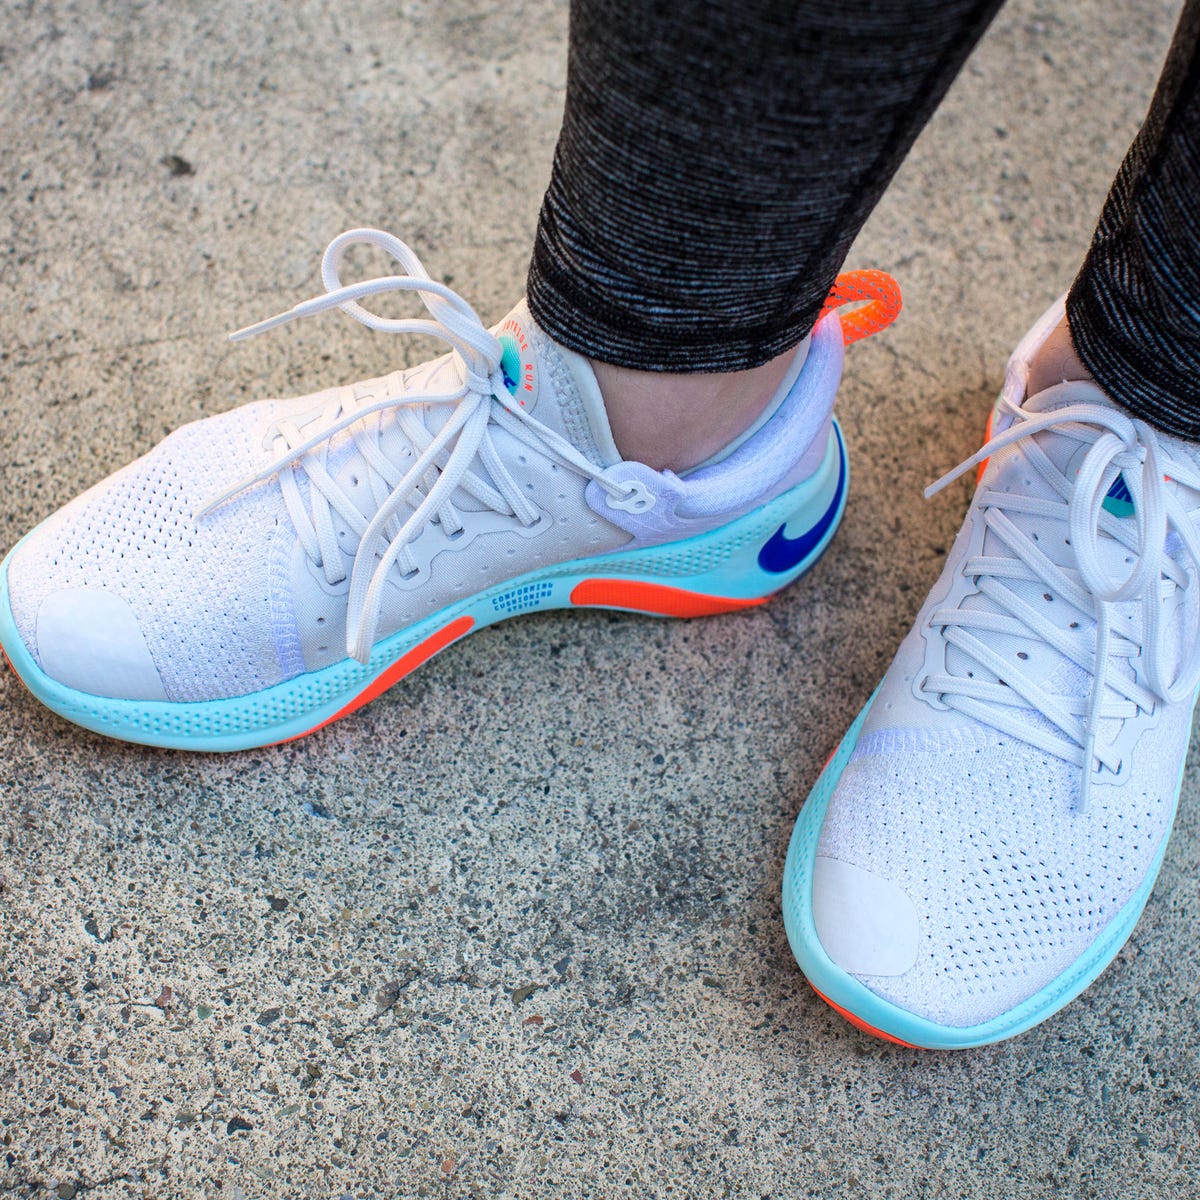 Contiene Saturar No se mueve To The Test: Nike Joyride shoes review - CNET